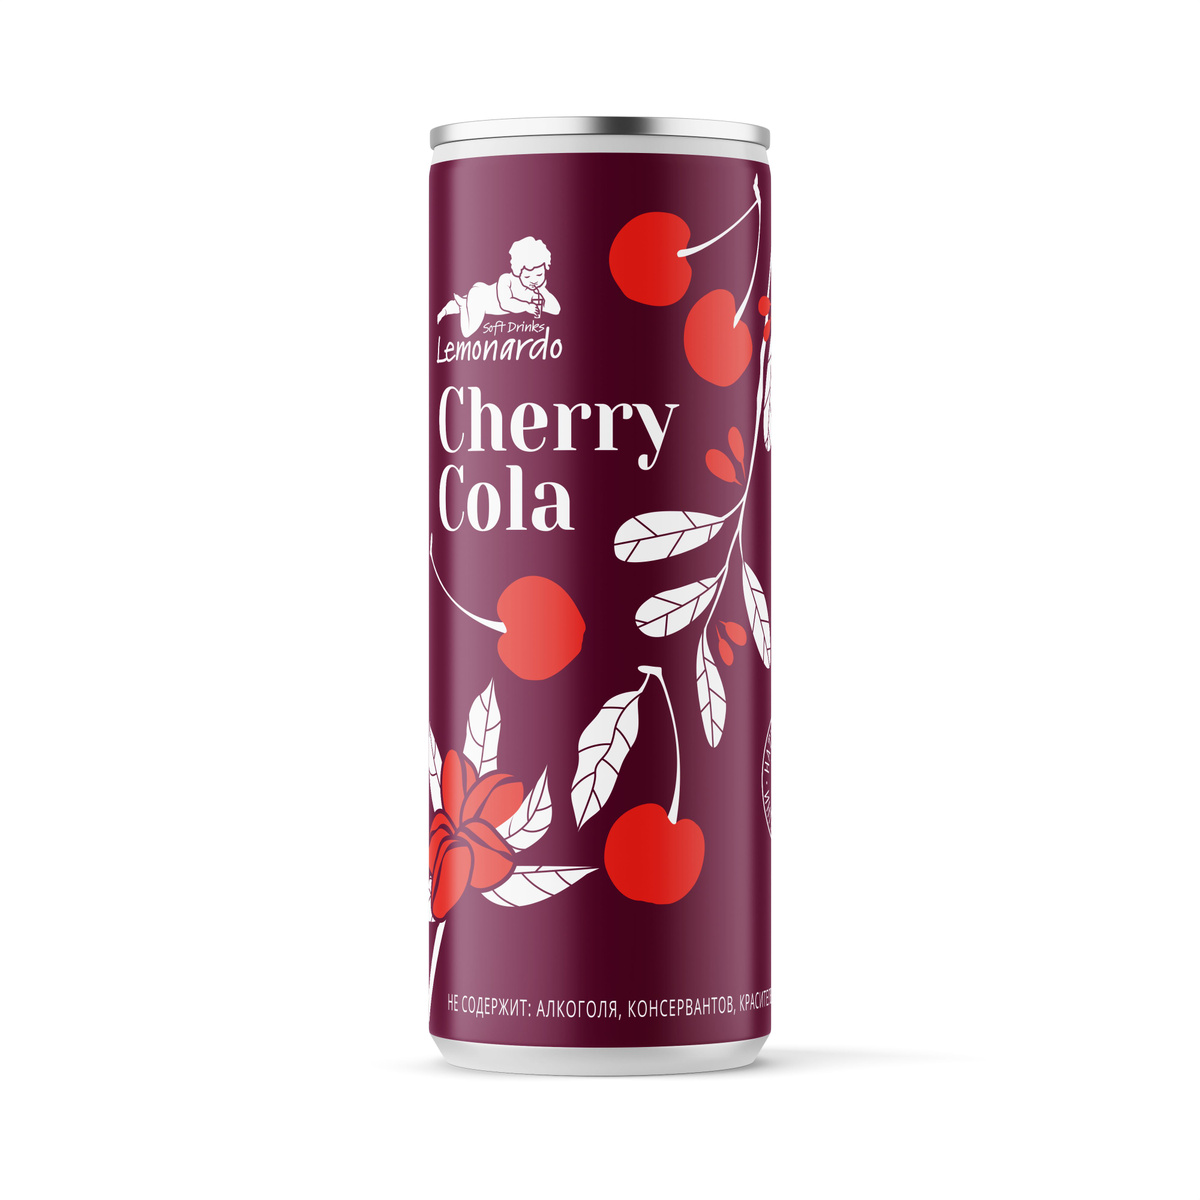 Вишневая кола без сахара / Lemonardo Cherry Cola, 330 мл